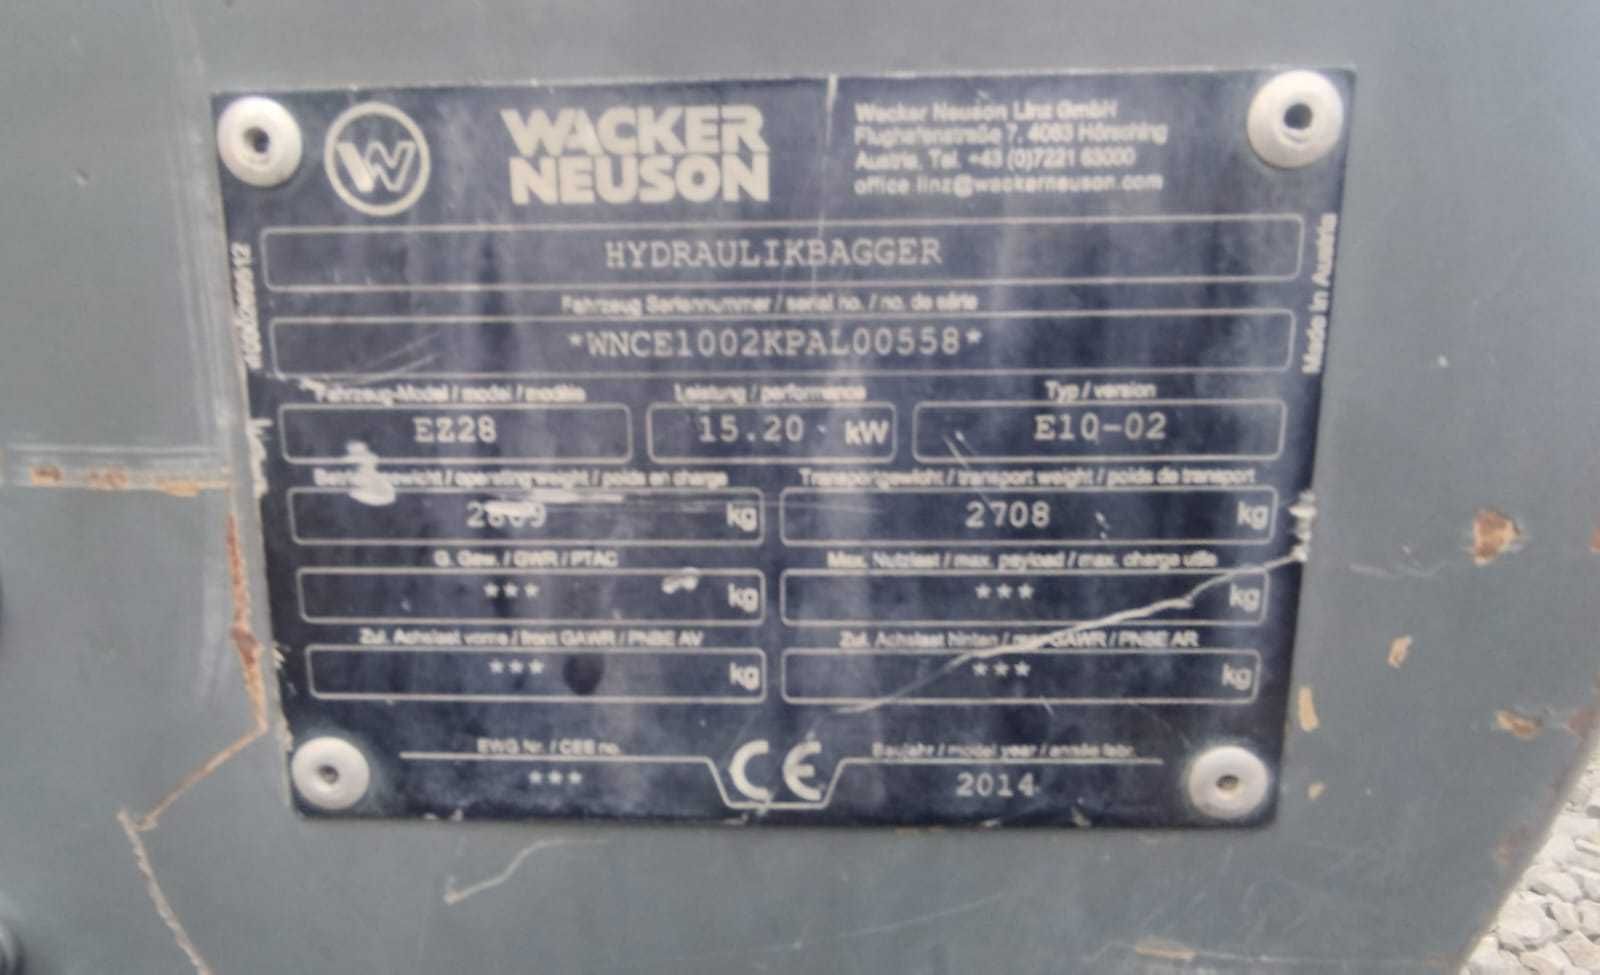 міні екскаватор Wacker-Neuson EZ28,2014